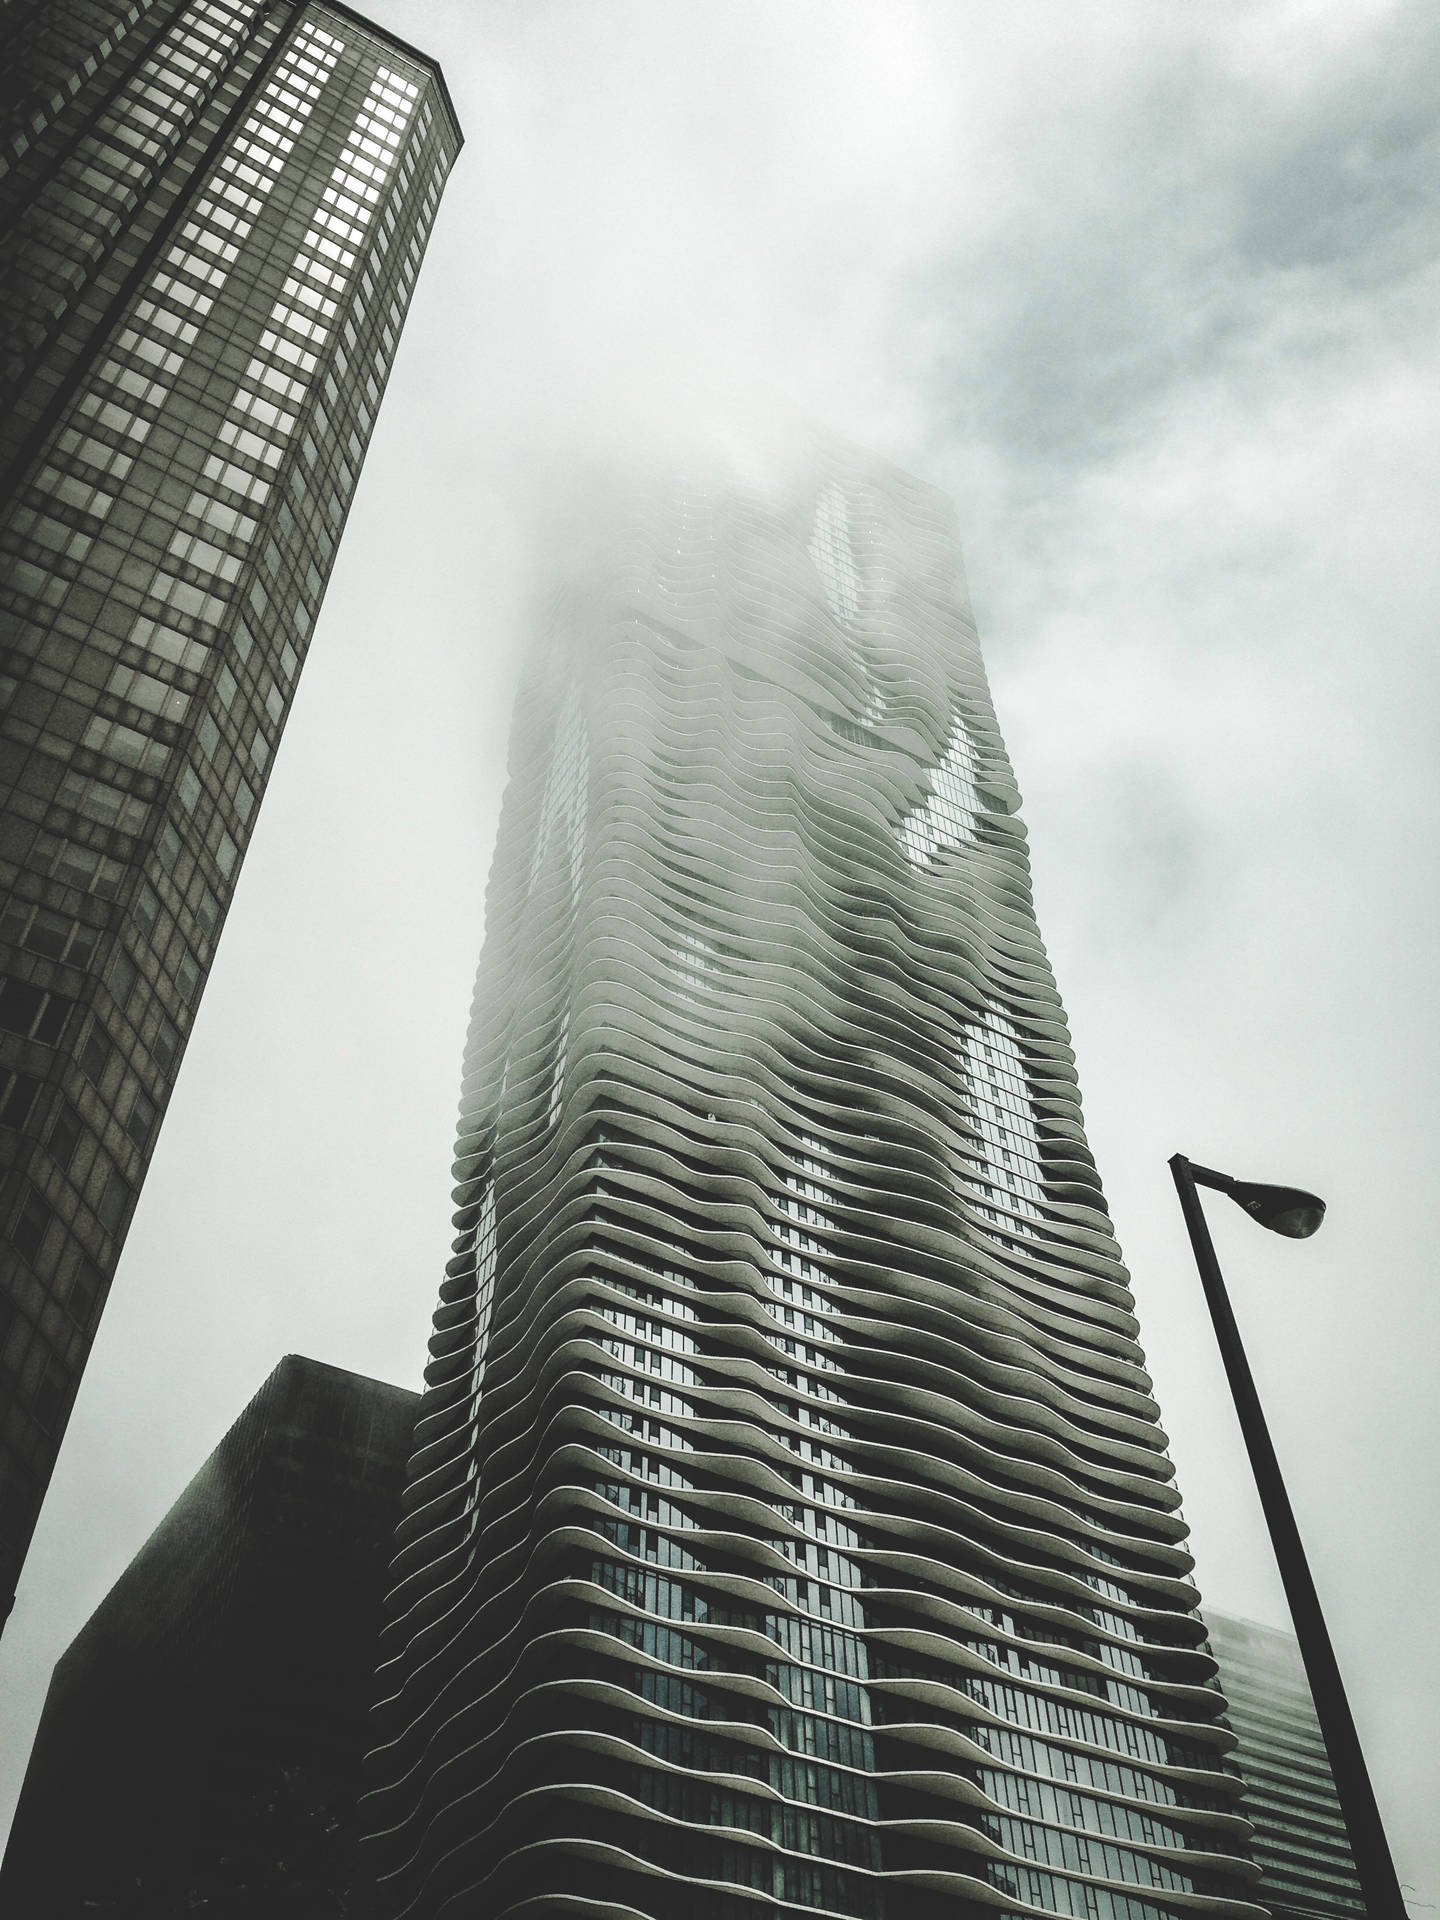 Monochrome Futuristic City Buildings